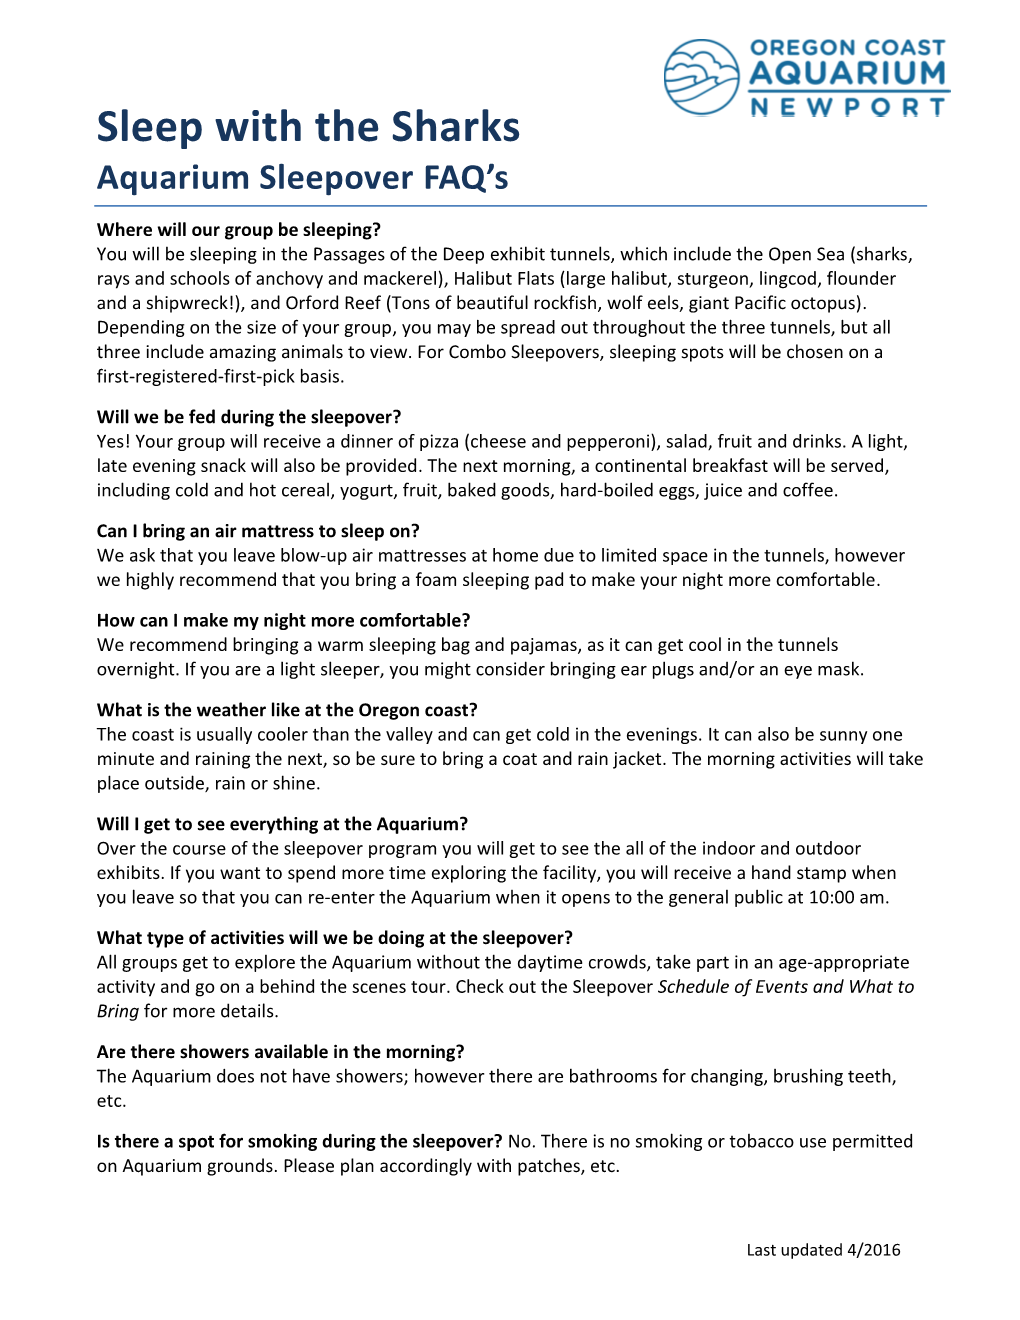 Sleep with the Sharks Aquarium Sleepover FAQ's